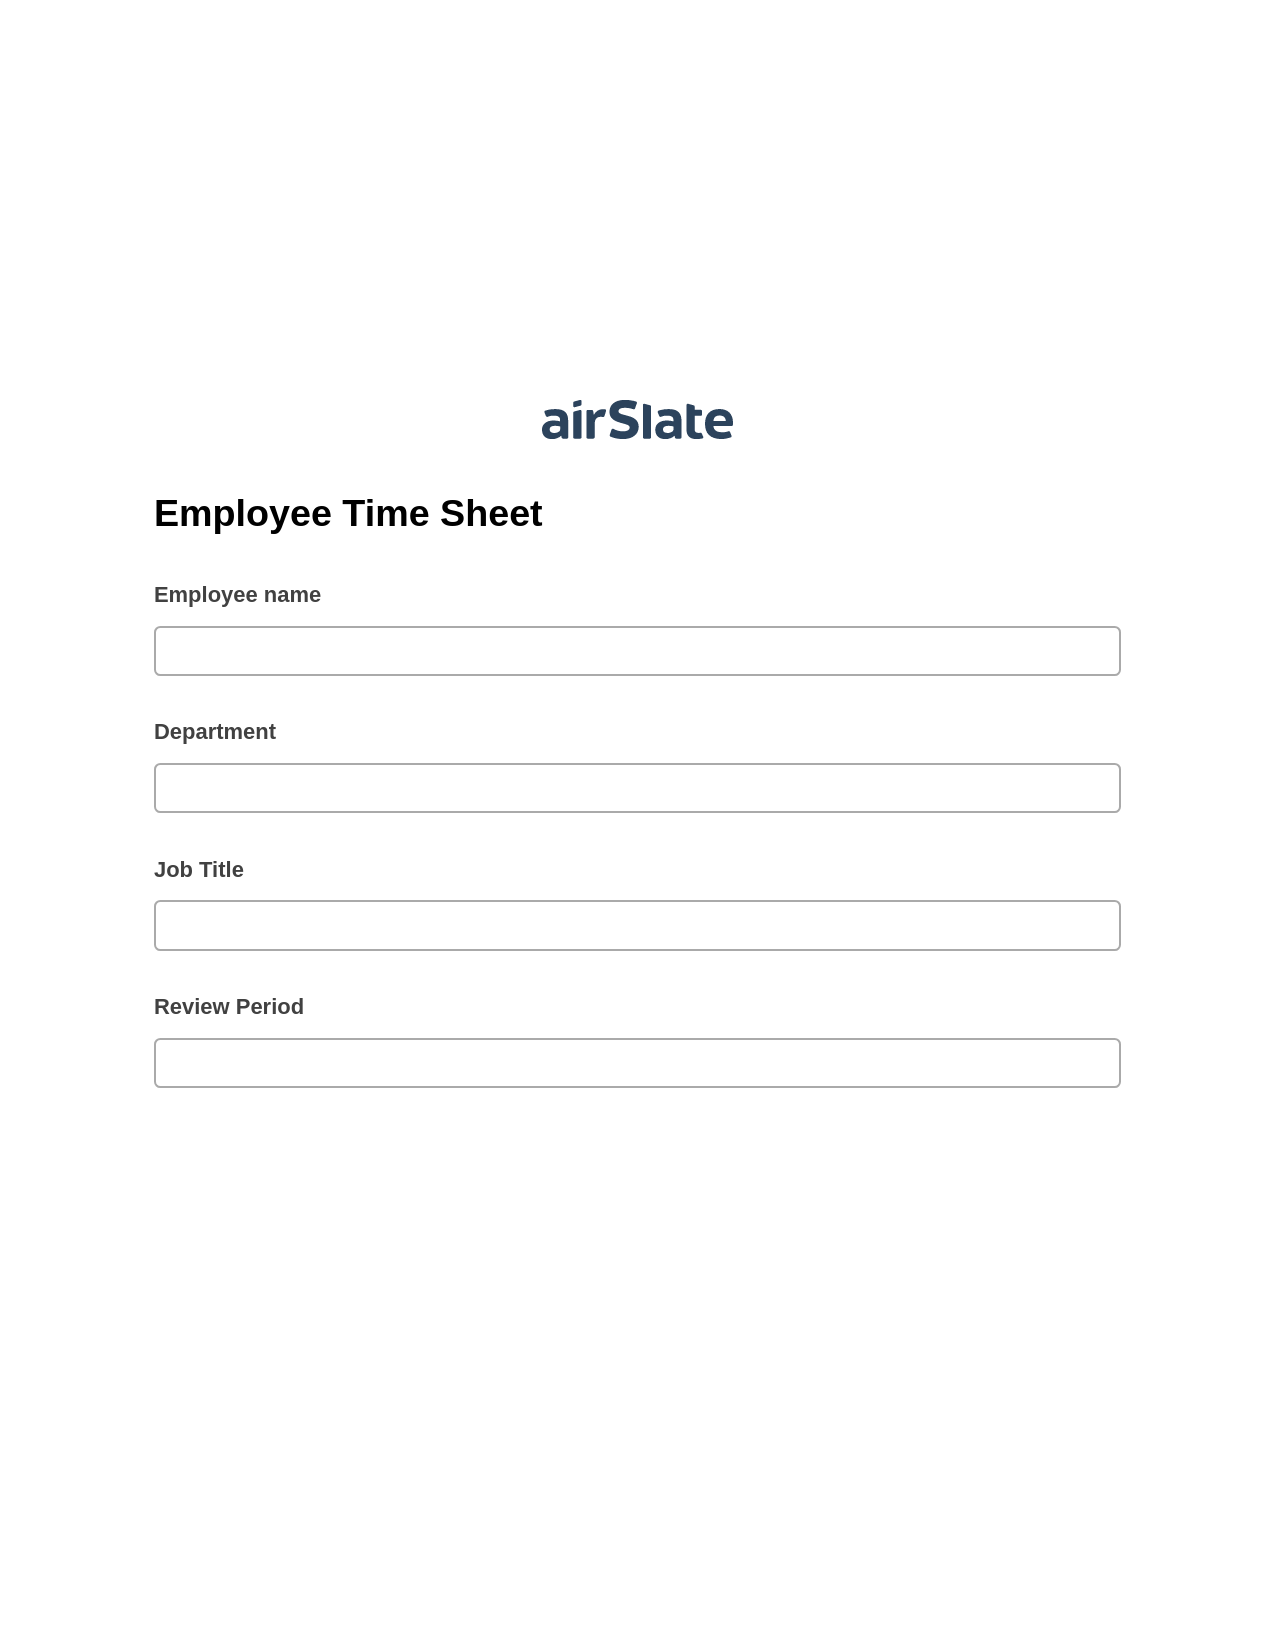 Multirole Employee Time Sheet Prefill from NetSuite records, Rename Slate Bot, Export to Google Sheet Bot